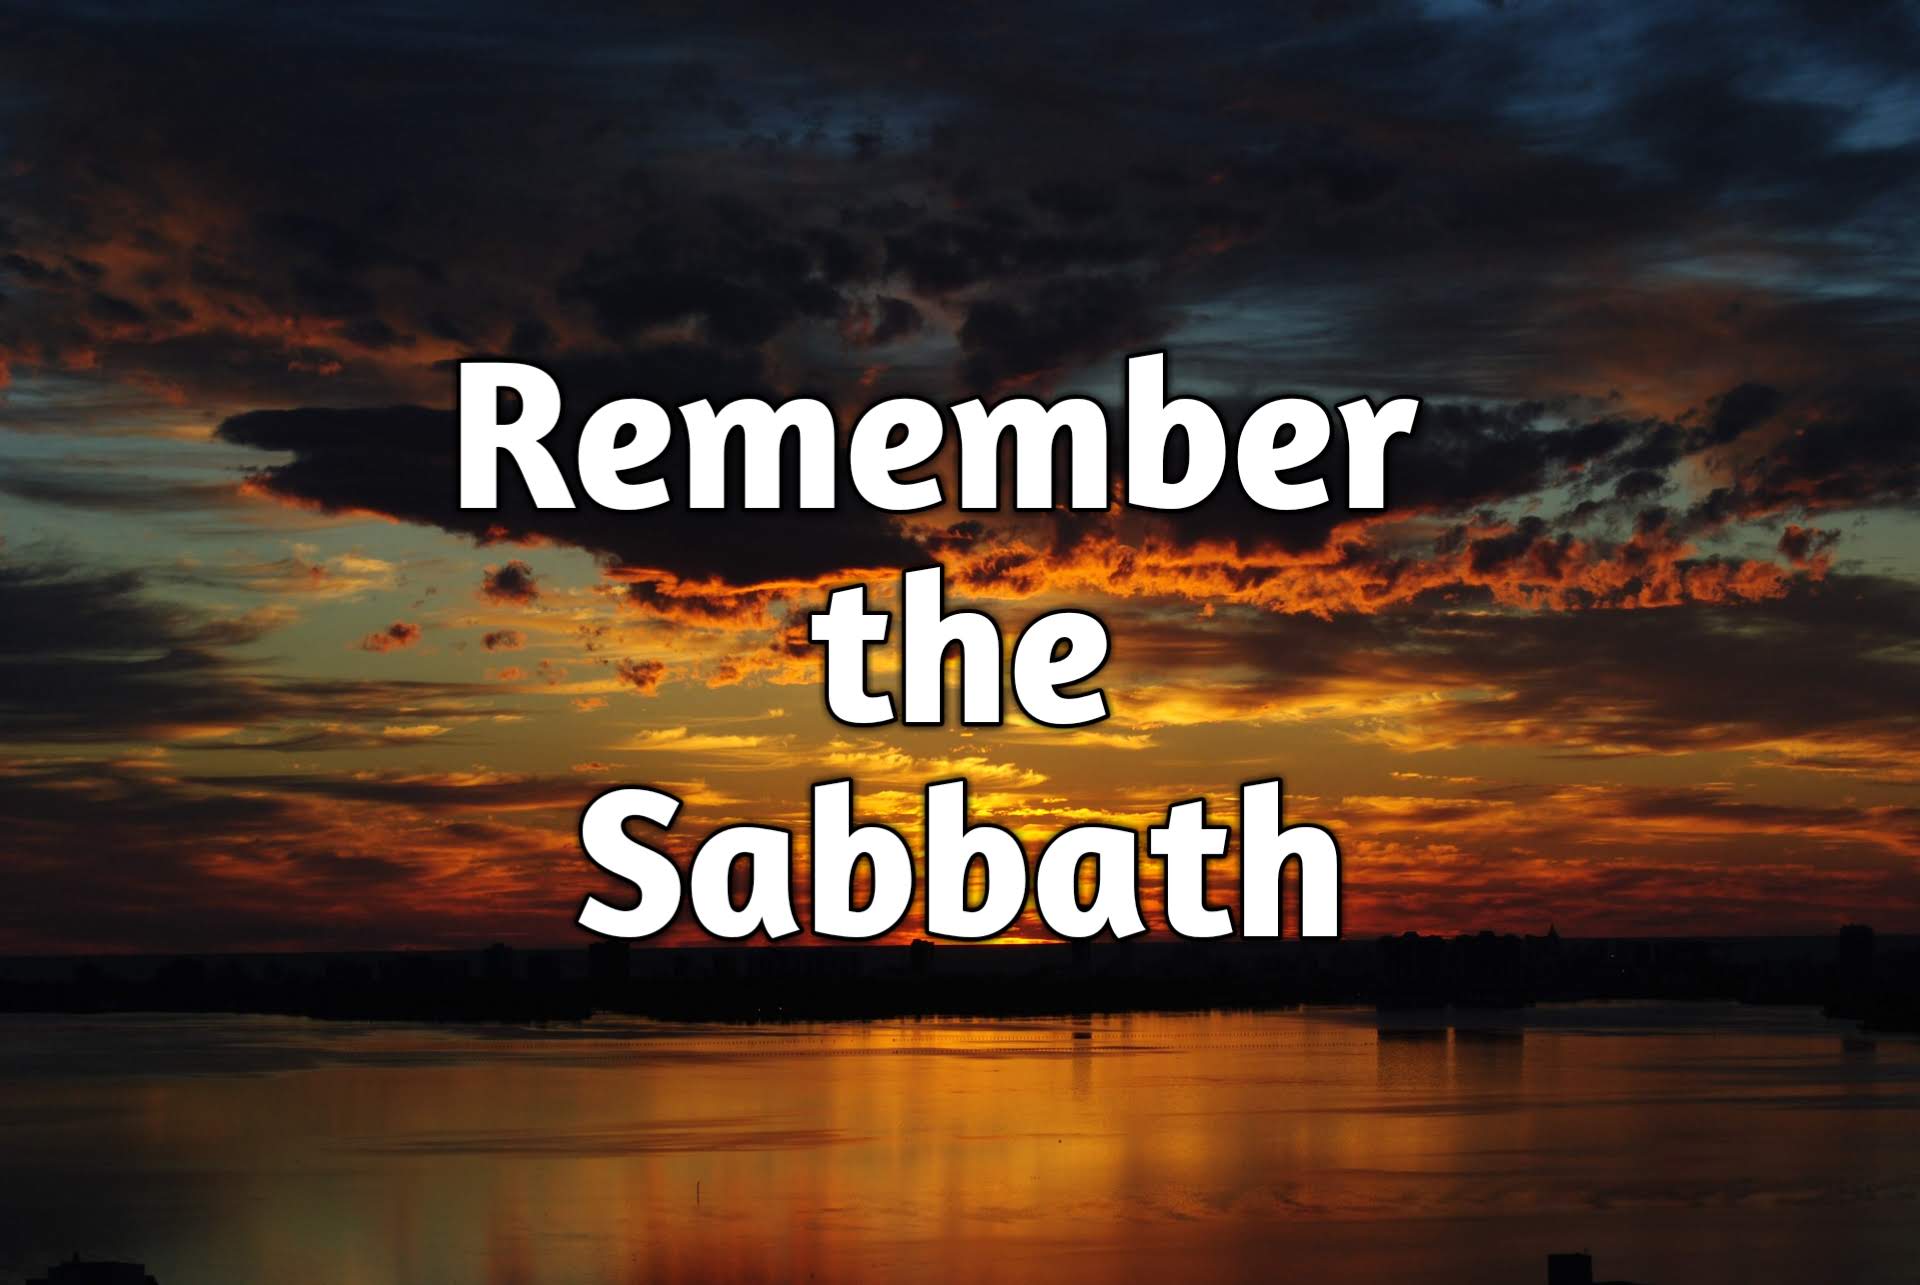 Why I Keep the Sabbath